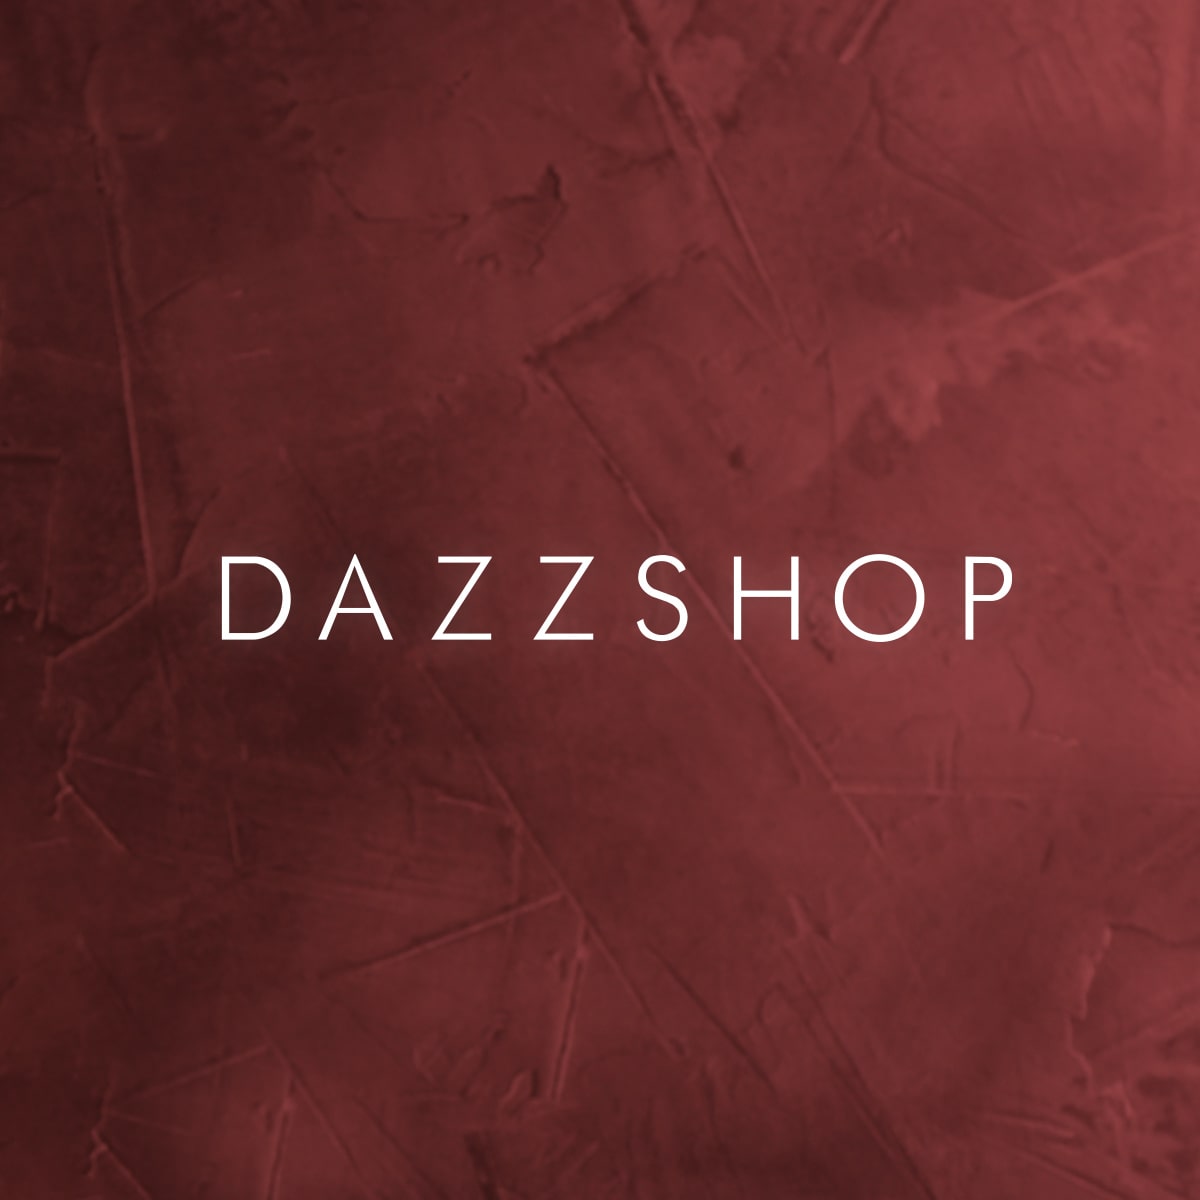 dazz shop